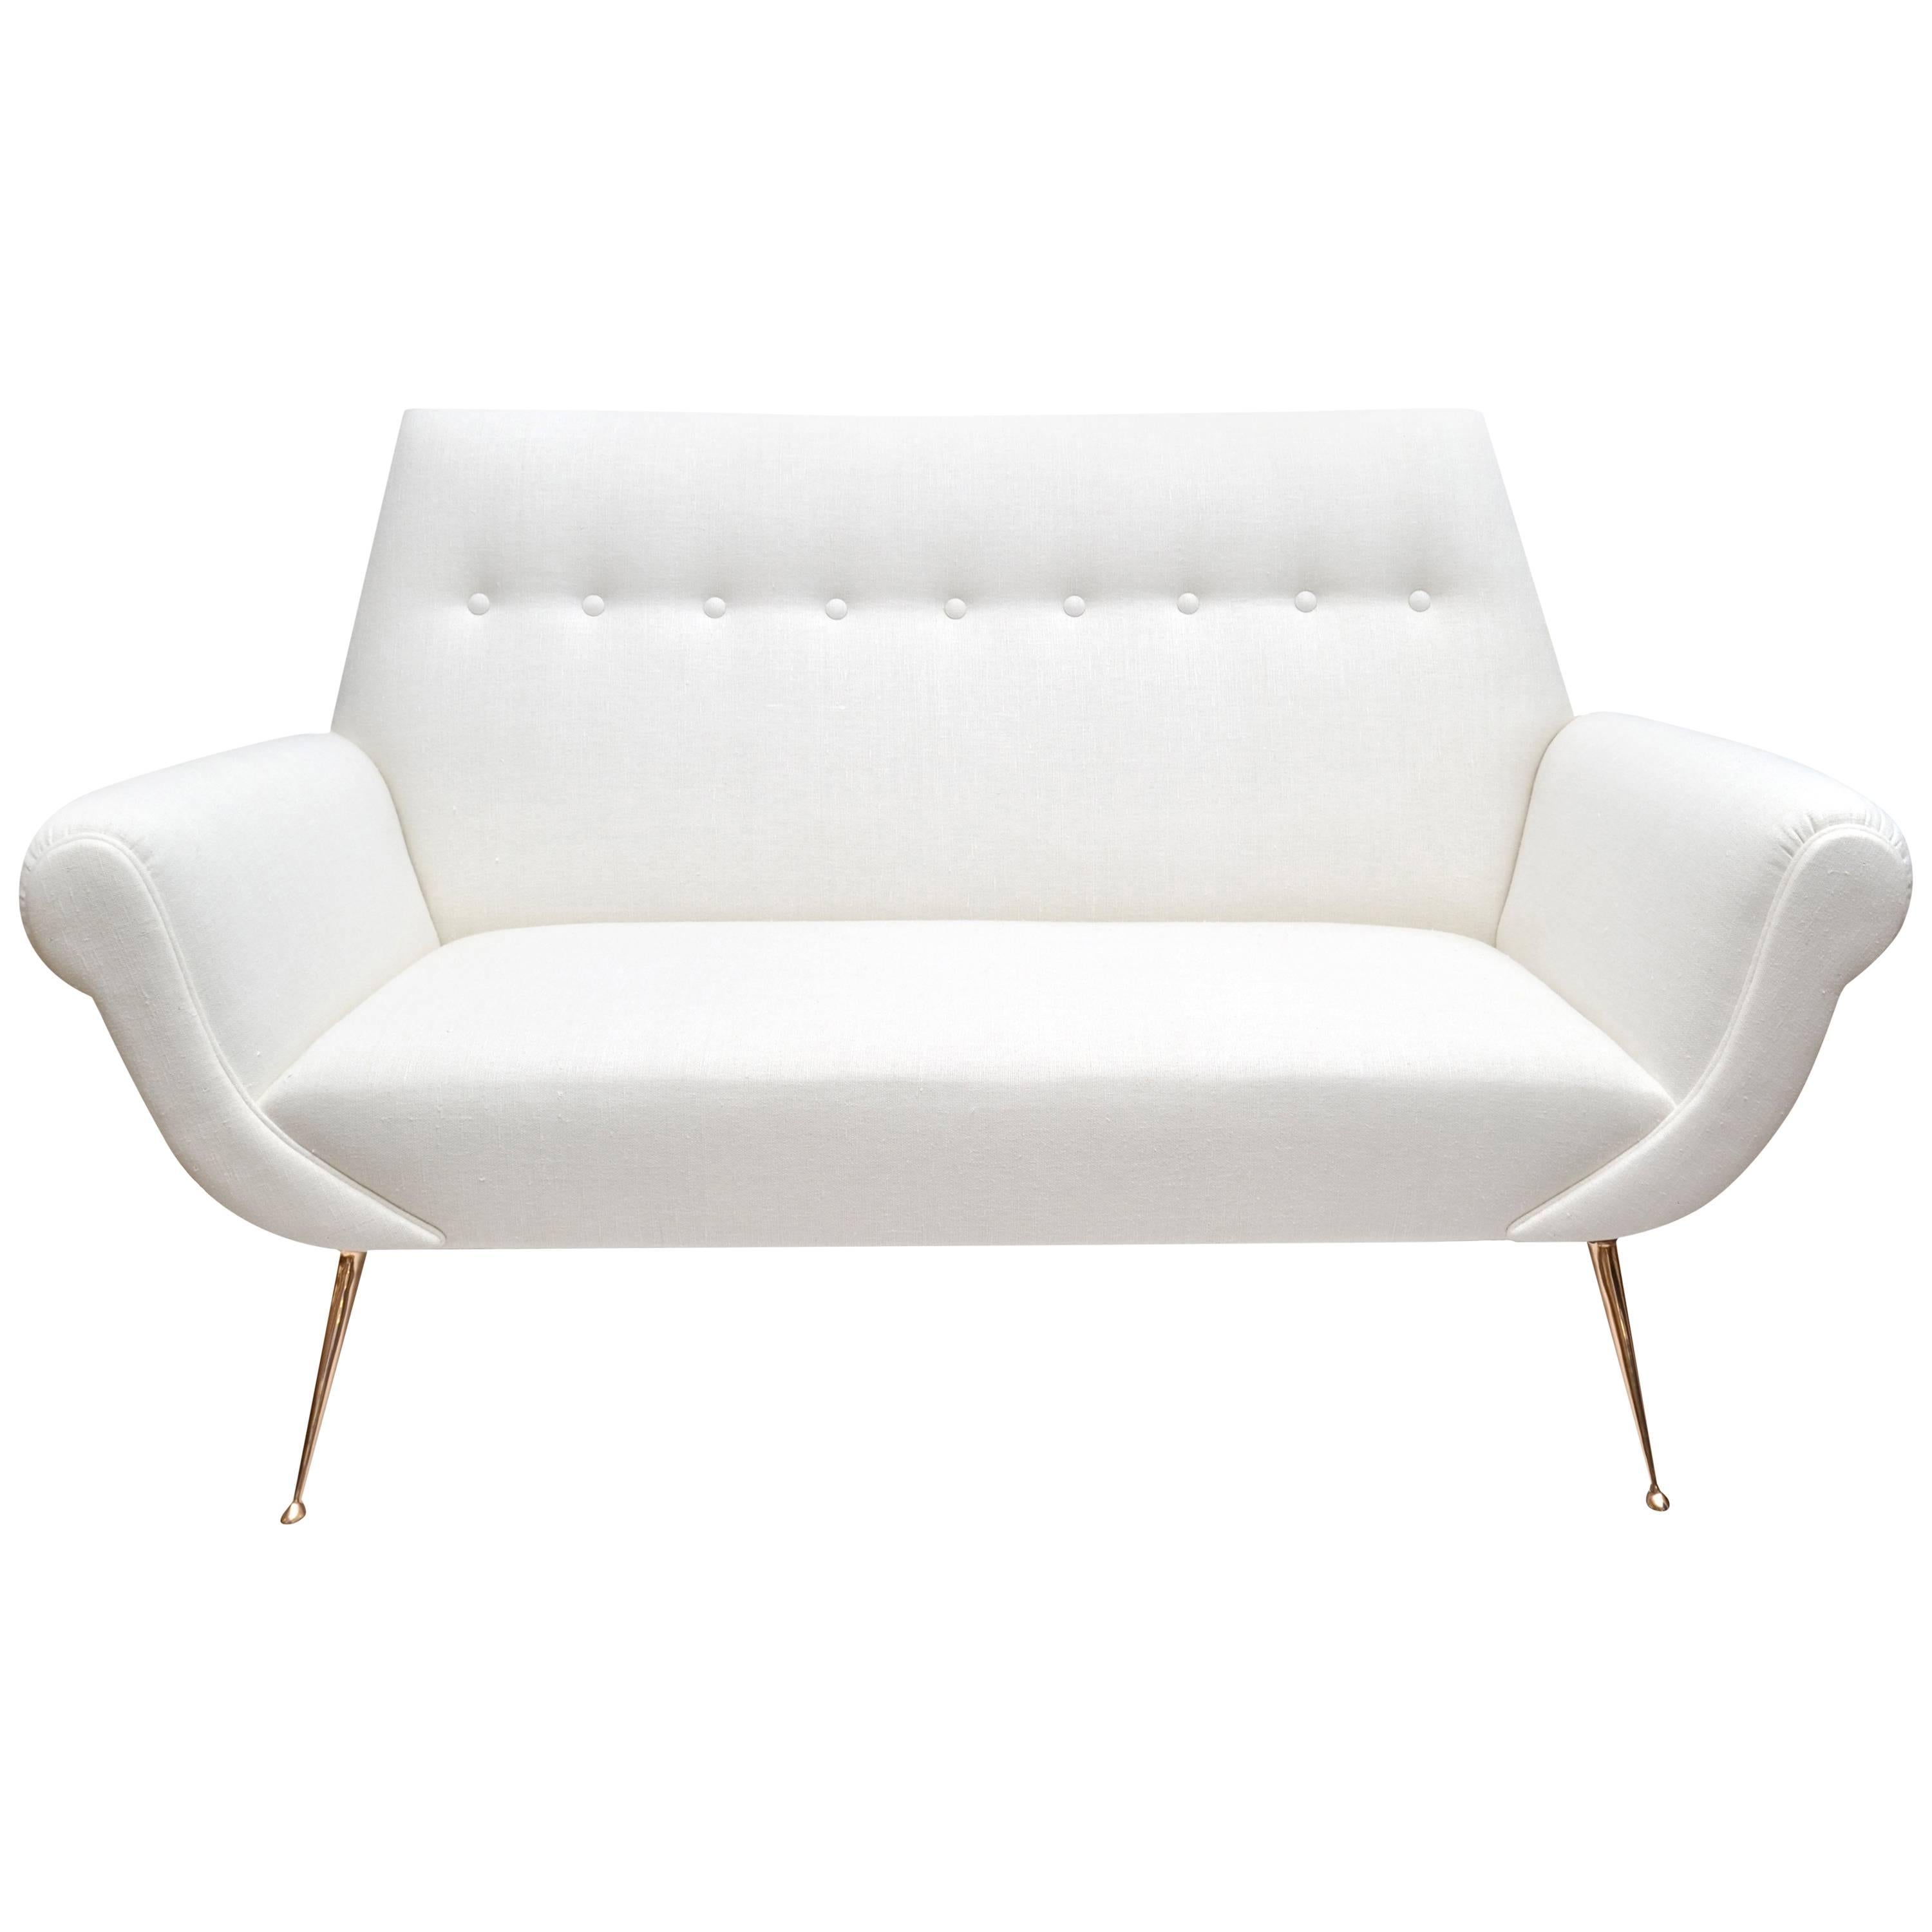 Mid-Century Modern White Sofa by Gigi Radice for Minotti with Solid Brass Legs